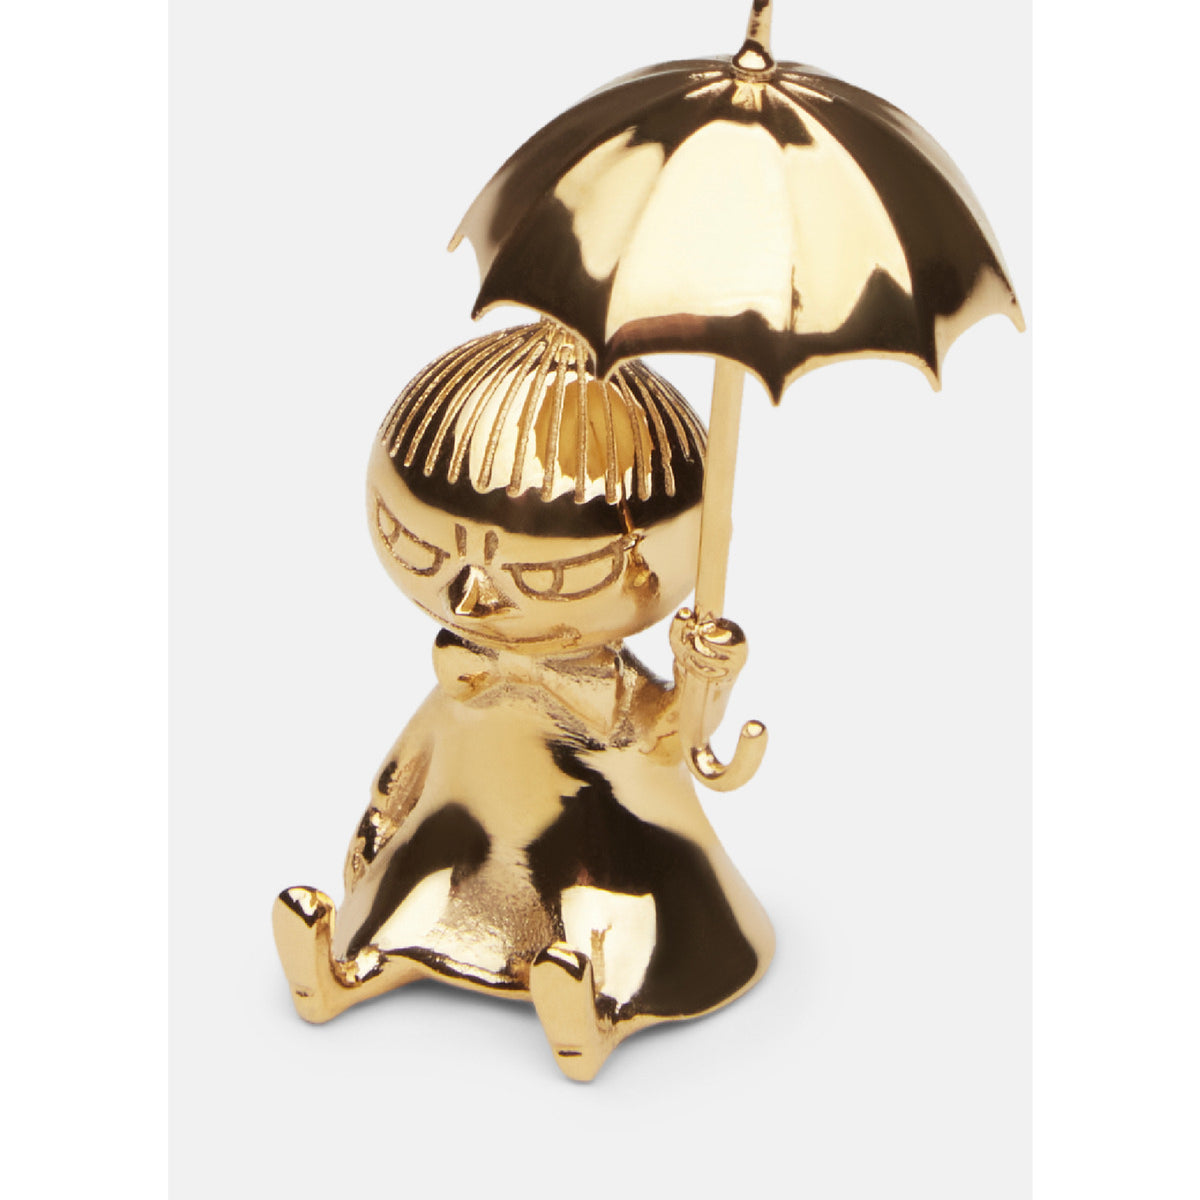 Little My Umbrella Figurine - Skultuna